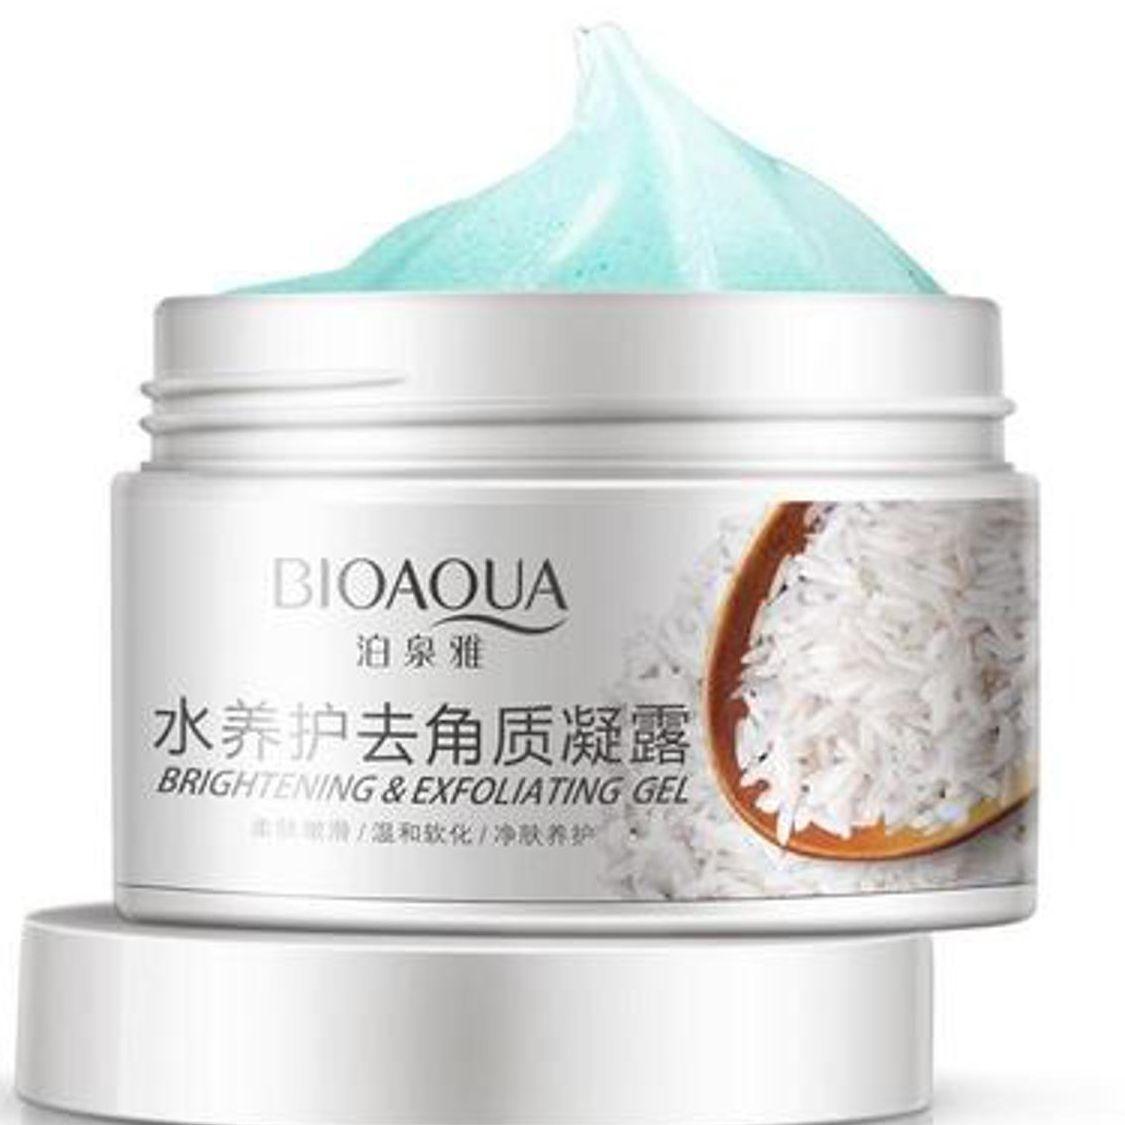 Bioaqua Brightening & Exfoliating Rice Gel Face Scrub 140 g – Ecom Venture